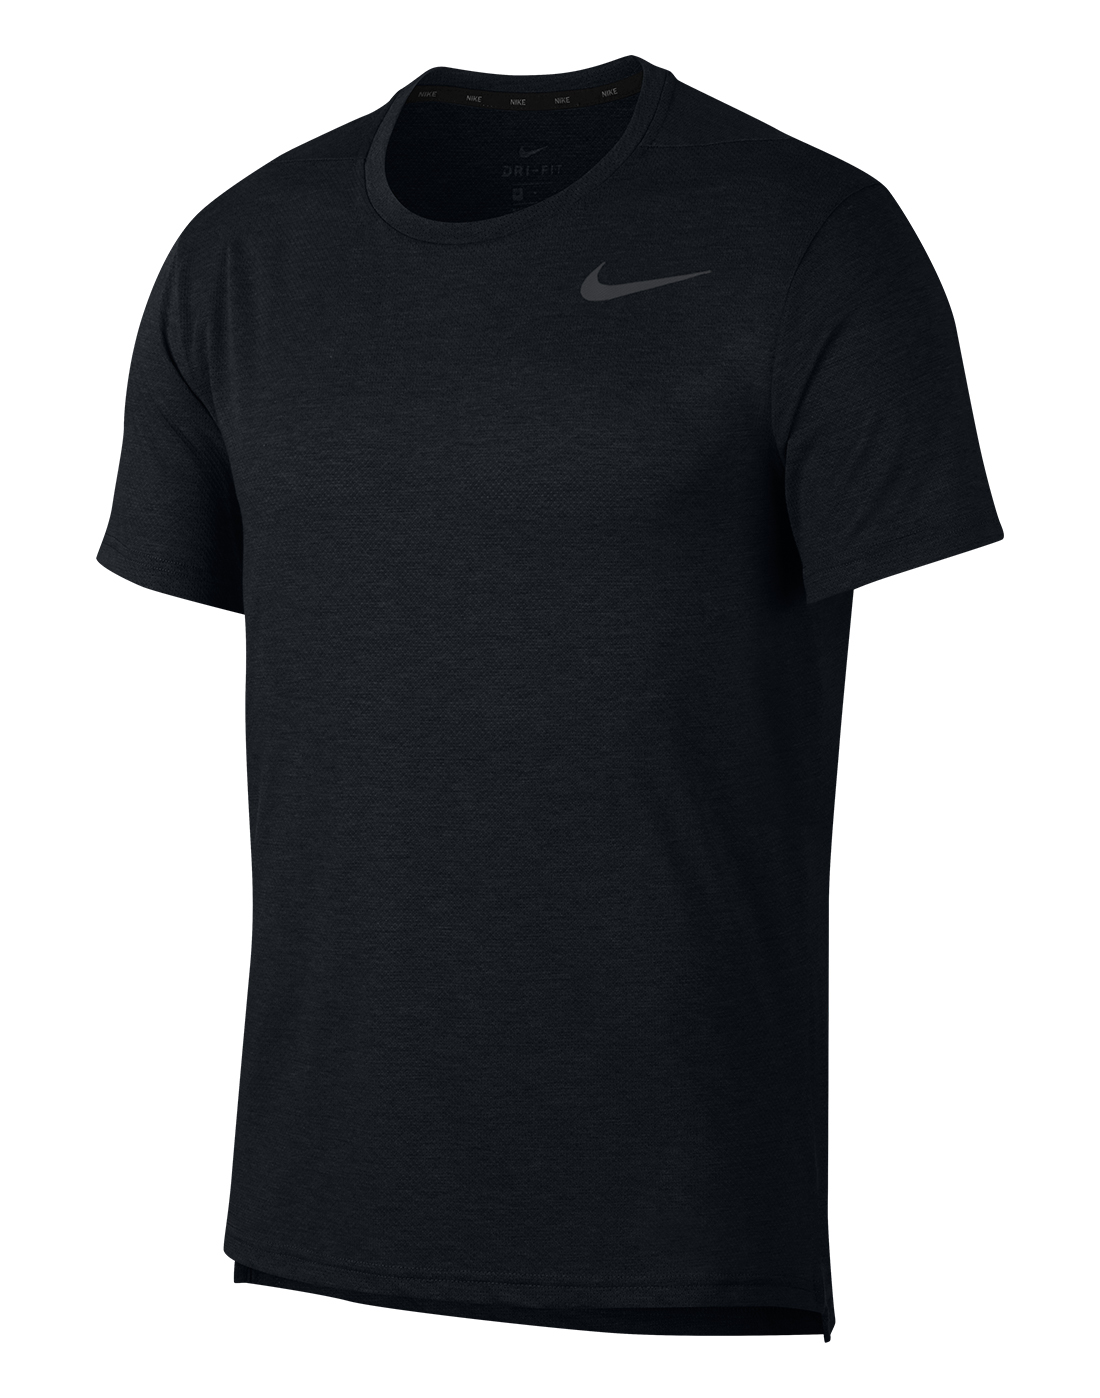 Men's Black Nike Gym T-Shirt | Life Style Sports